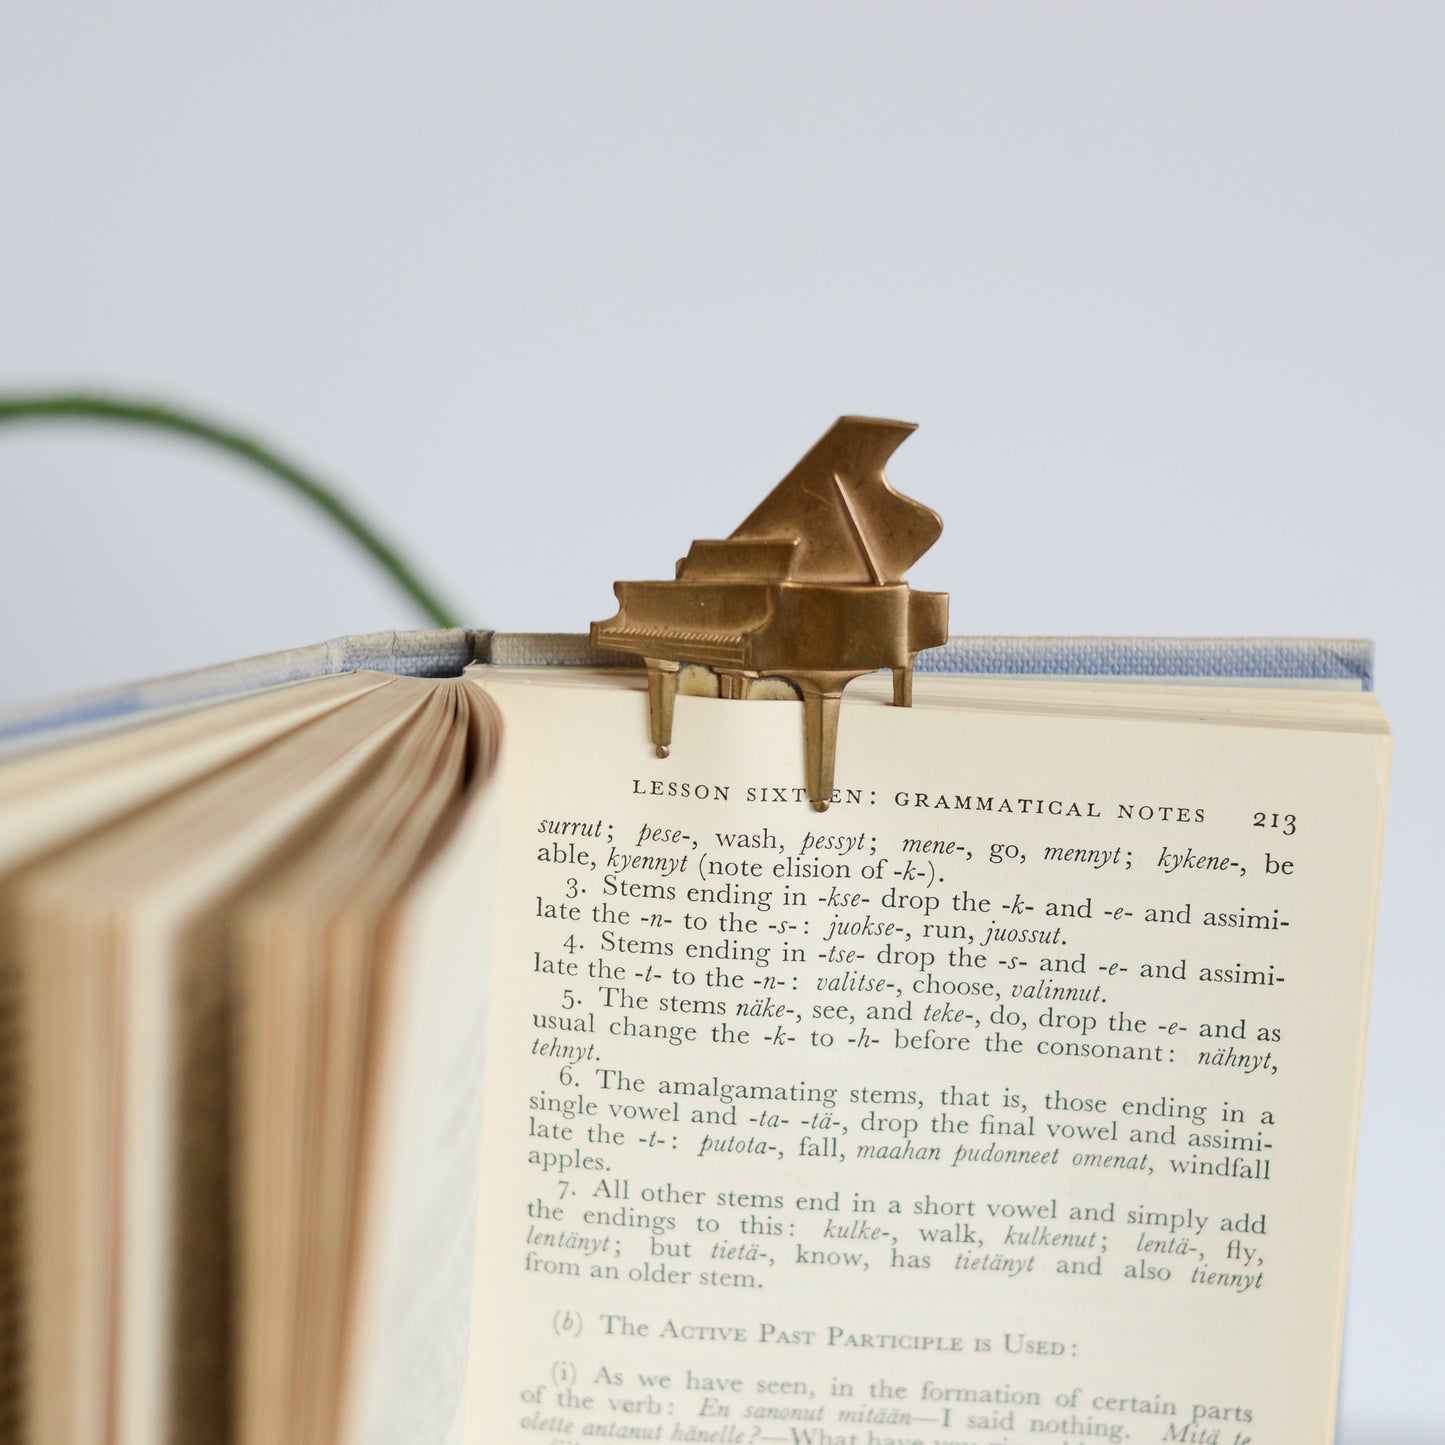 Vintage Brass Piano Bookmark